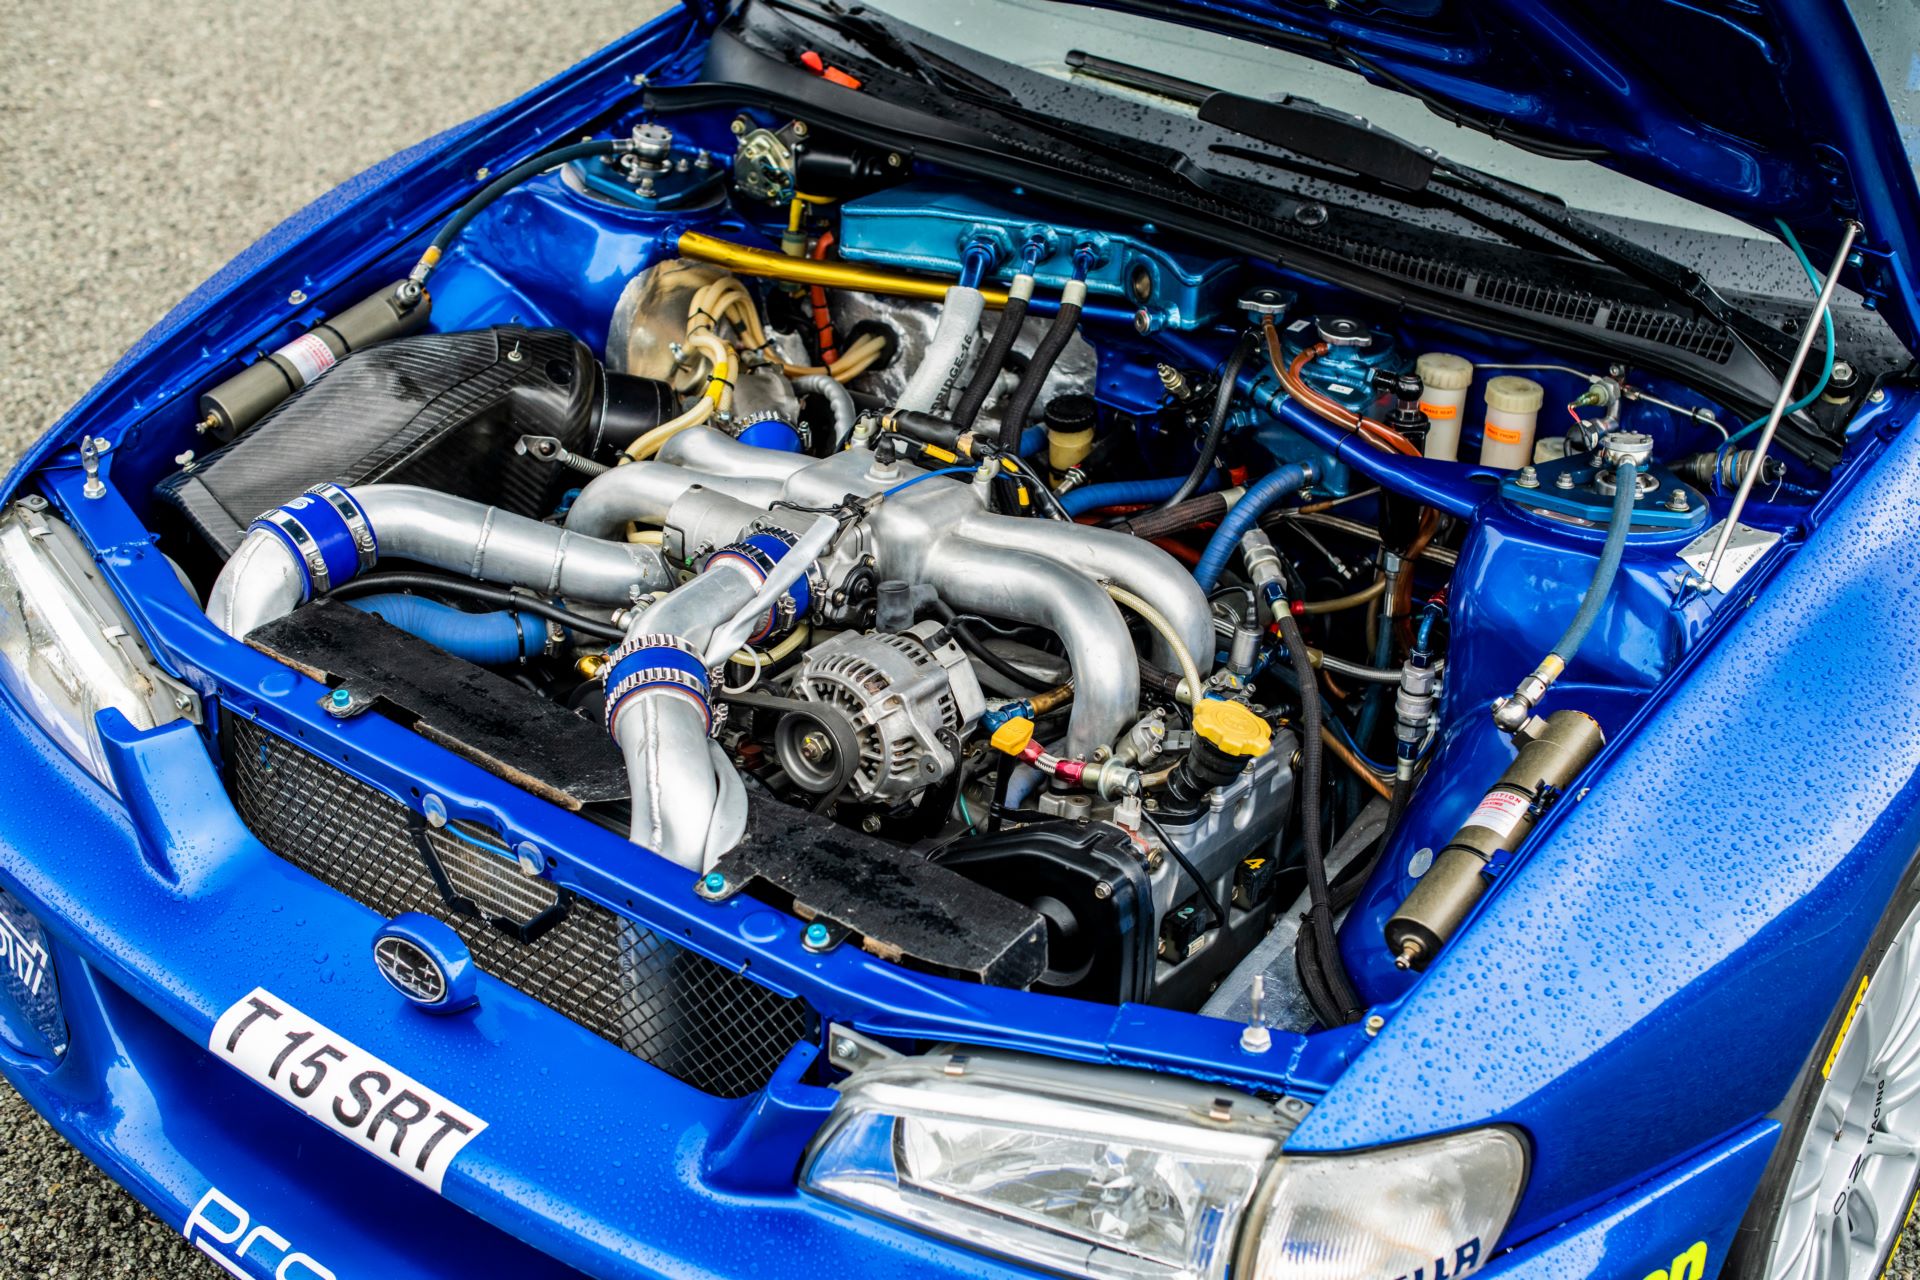 Subaru-Impreza-WRC-Richard-Burns-auction-85